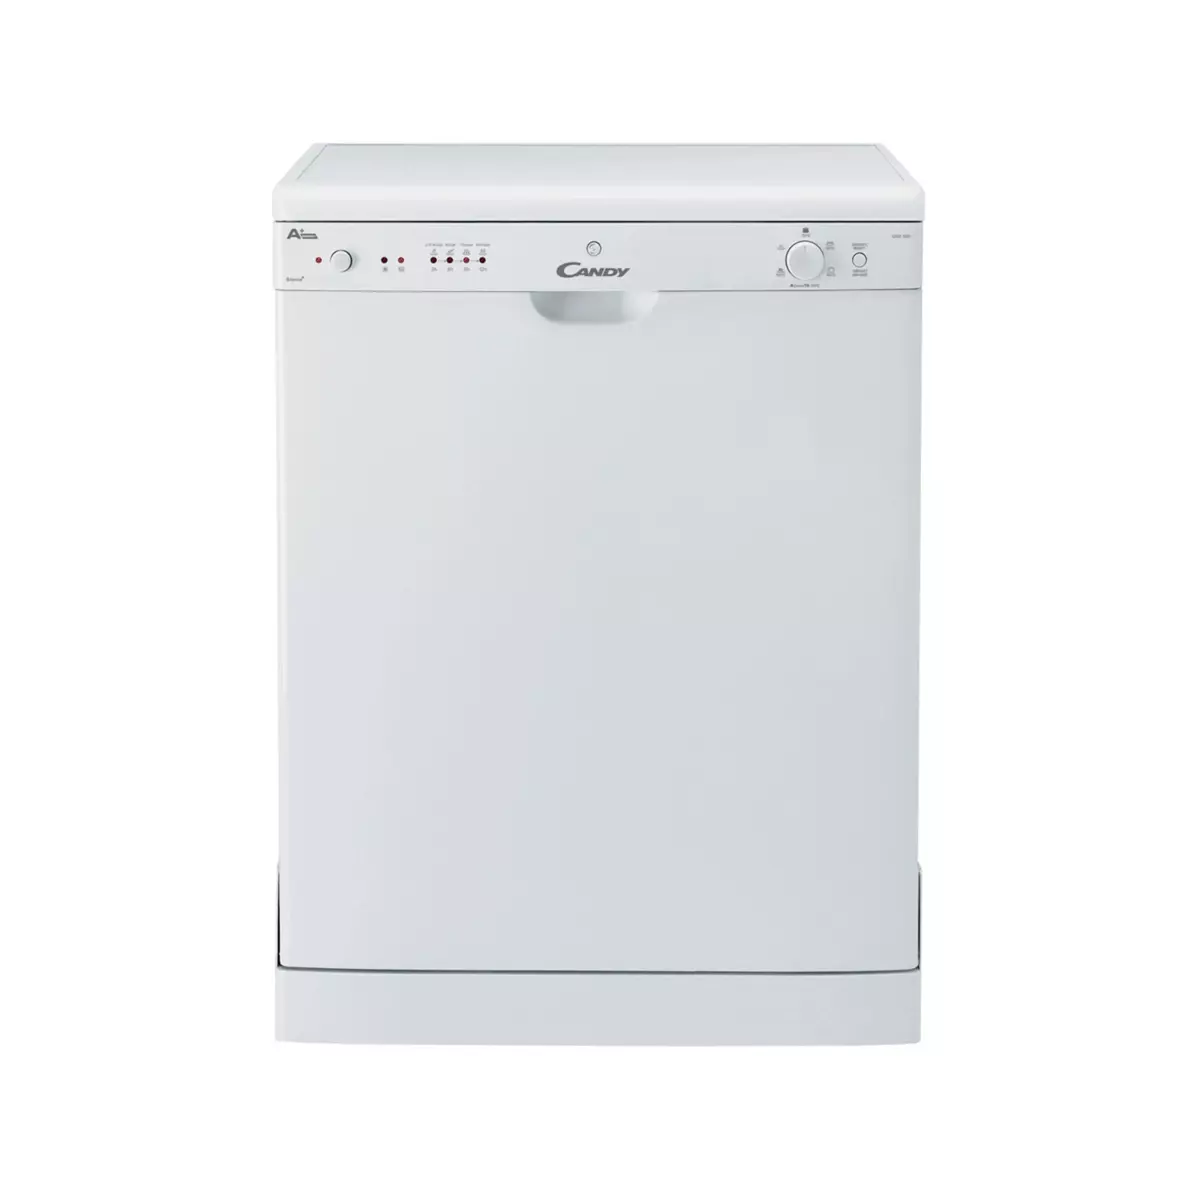 CANDY Lave-vaisselle CED 120/1-47, 12 couverts, 60 cm, 49 dB, 6 programmes